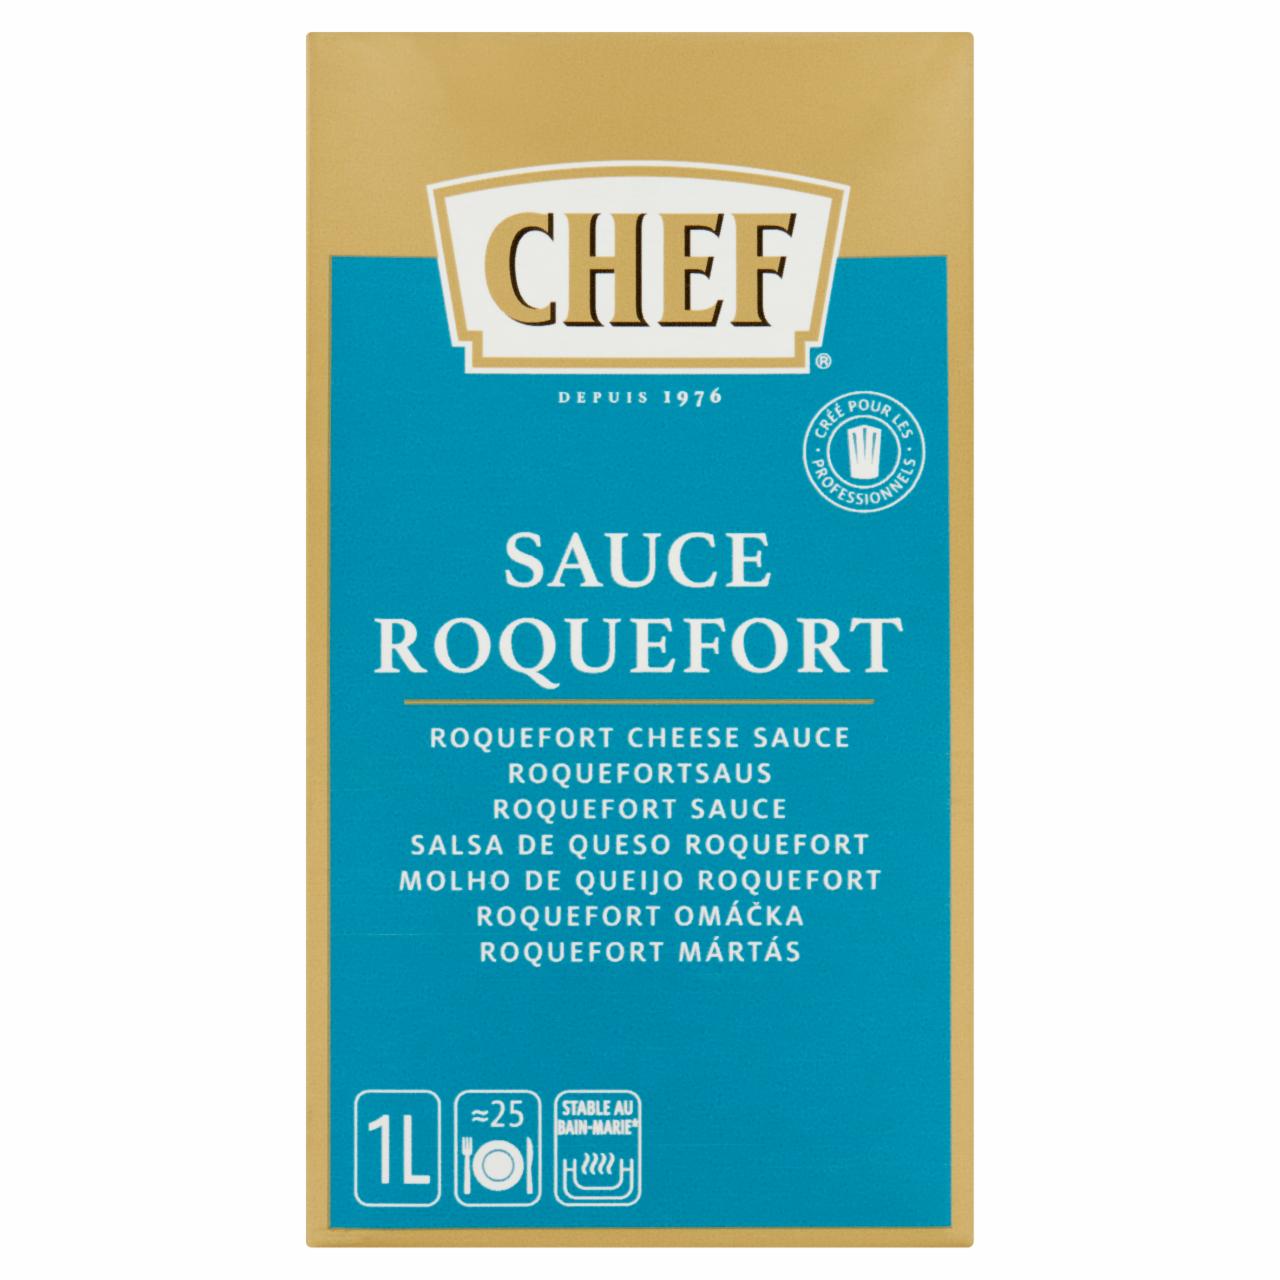 Képek - Chef roquefort mártás 1 l